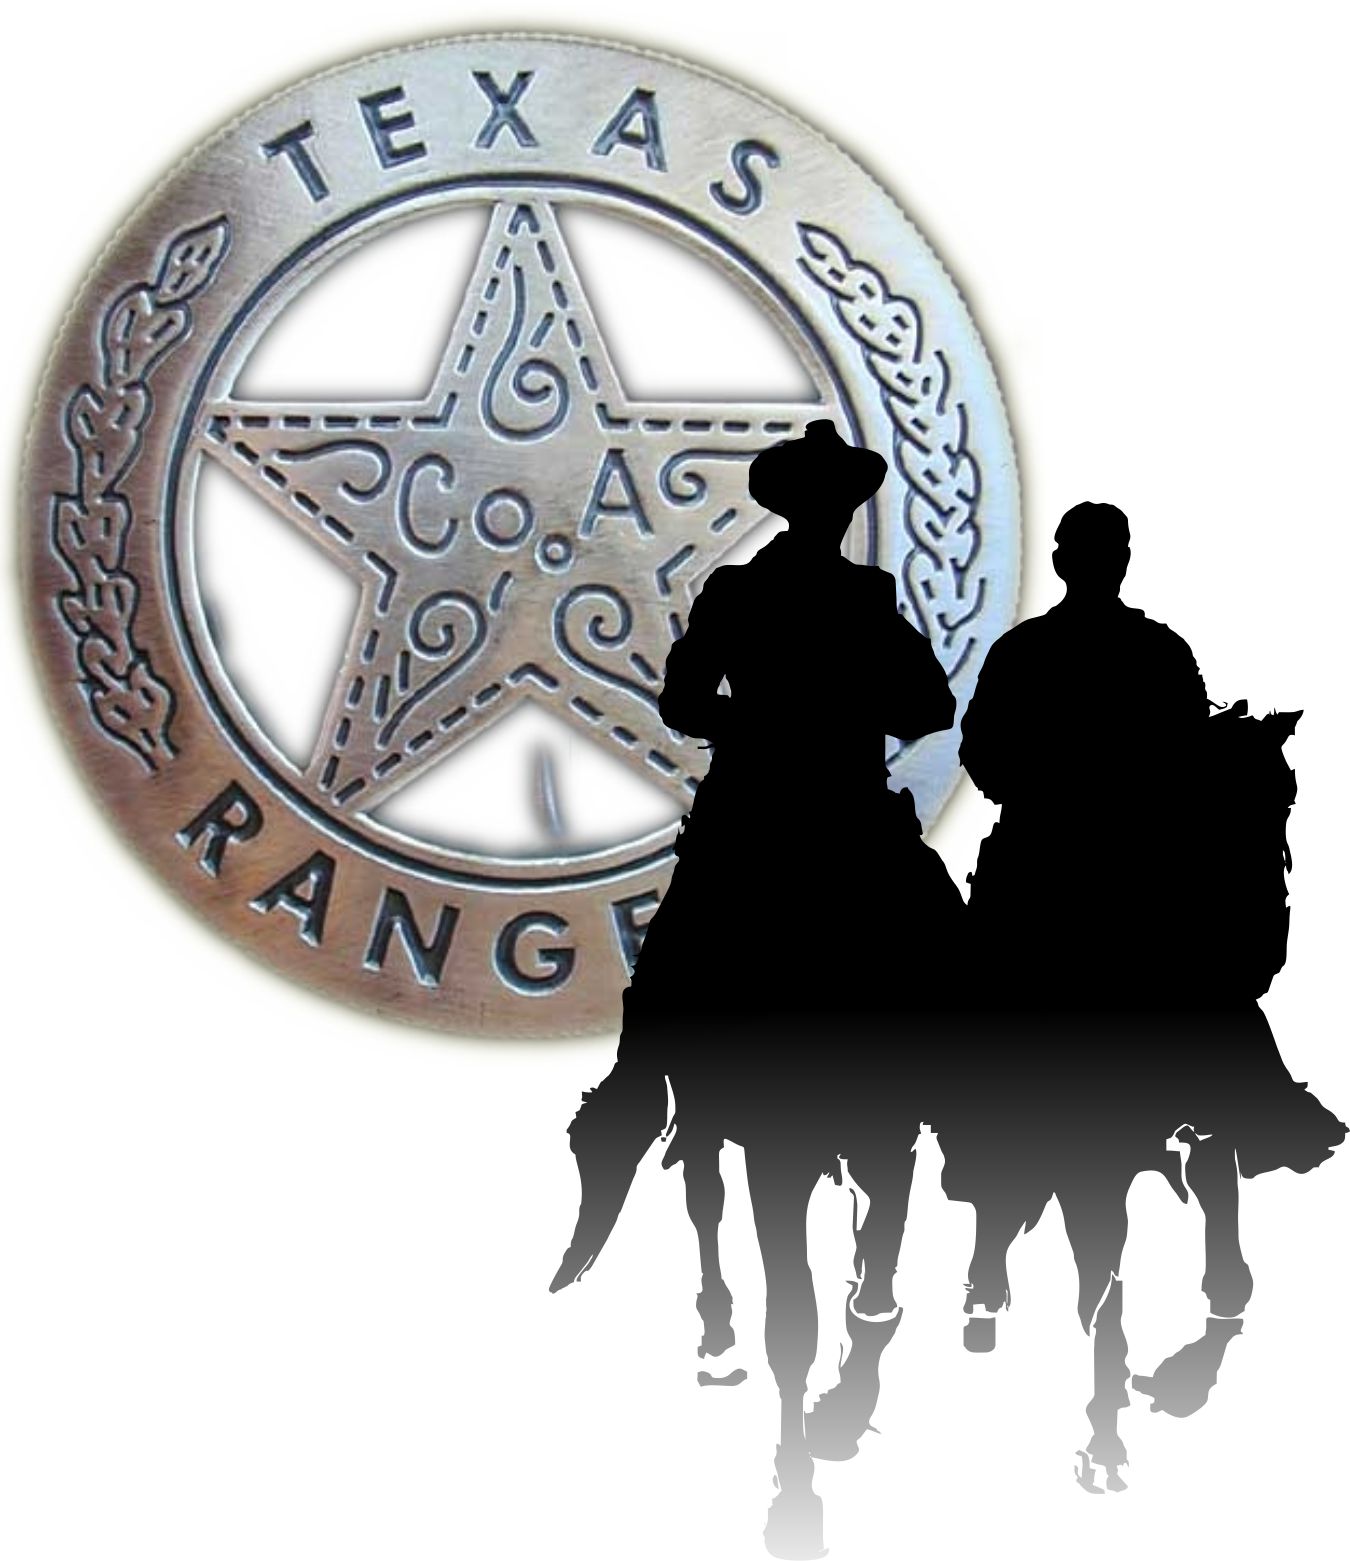 Texas Rangers badge 10